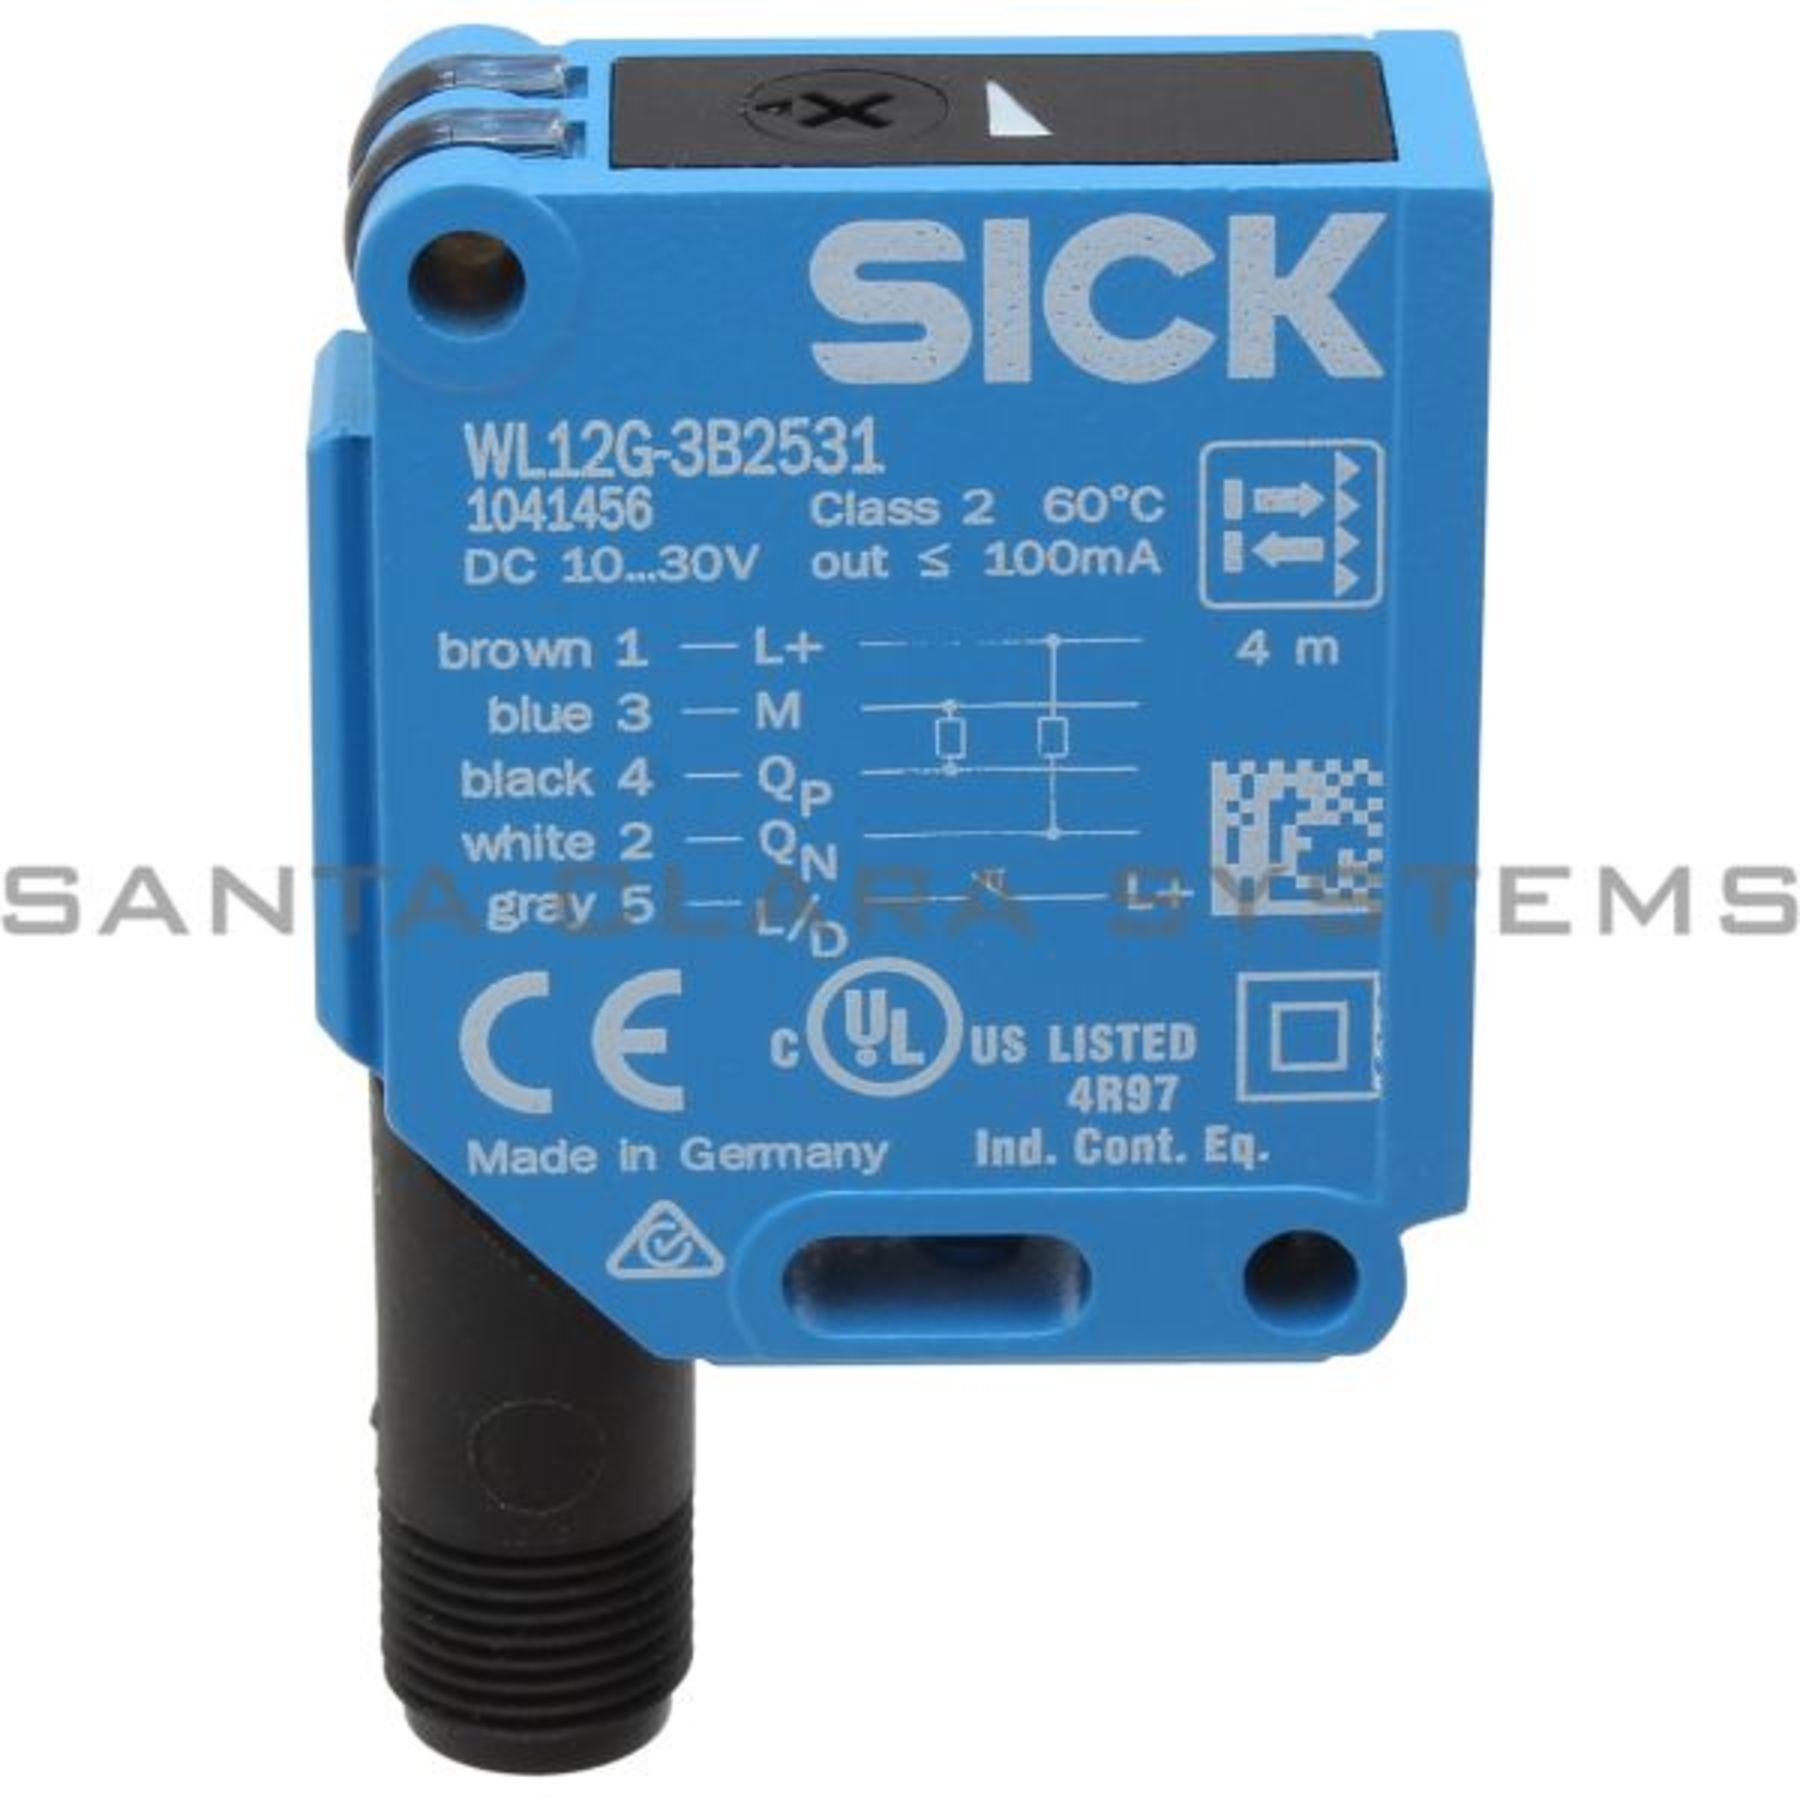 SICK Wl12g-3b2531 1041456 Photoelectric Switch Sensor for sale online 